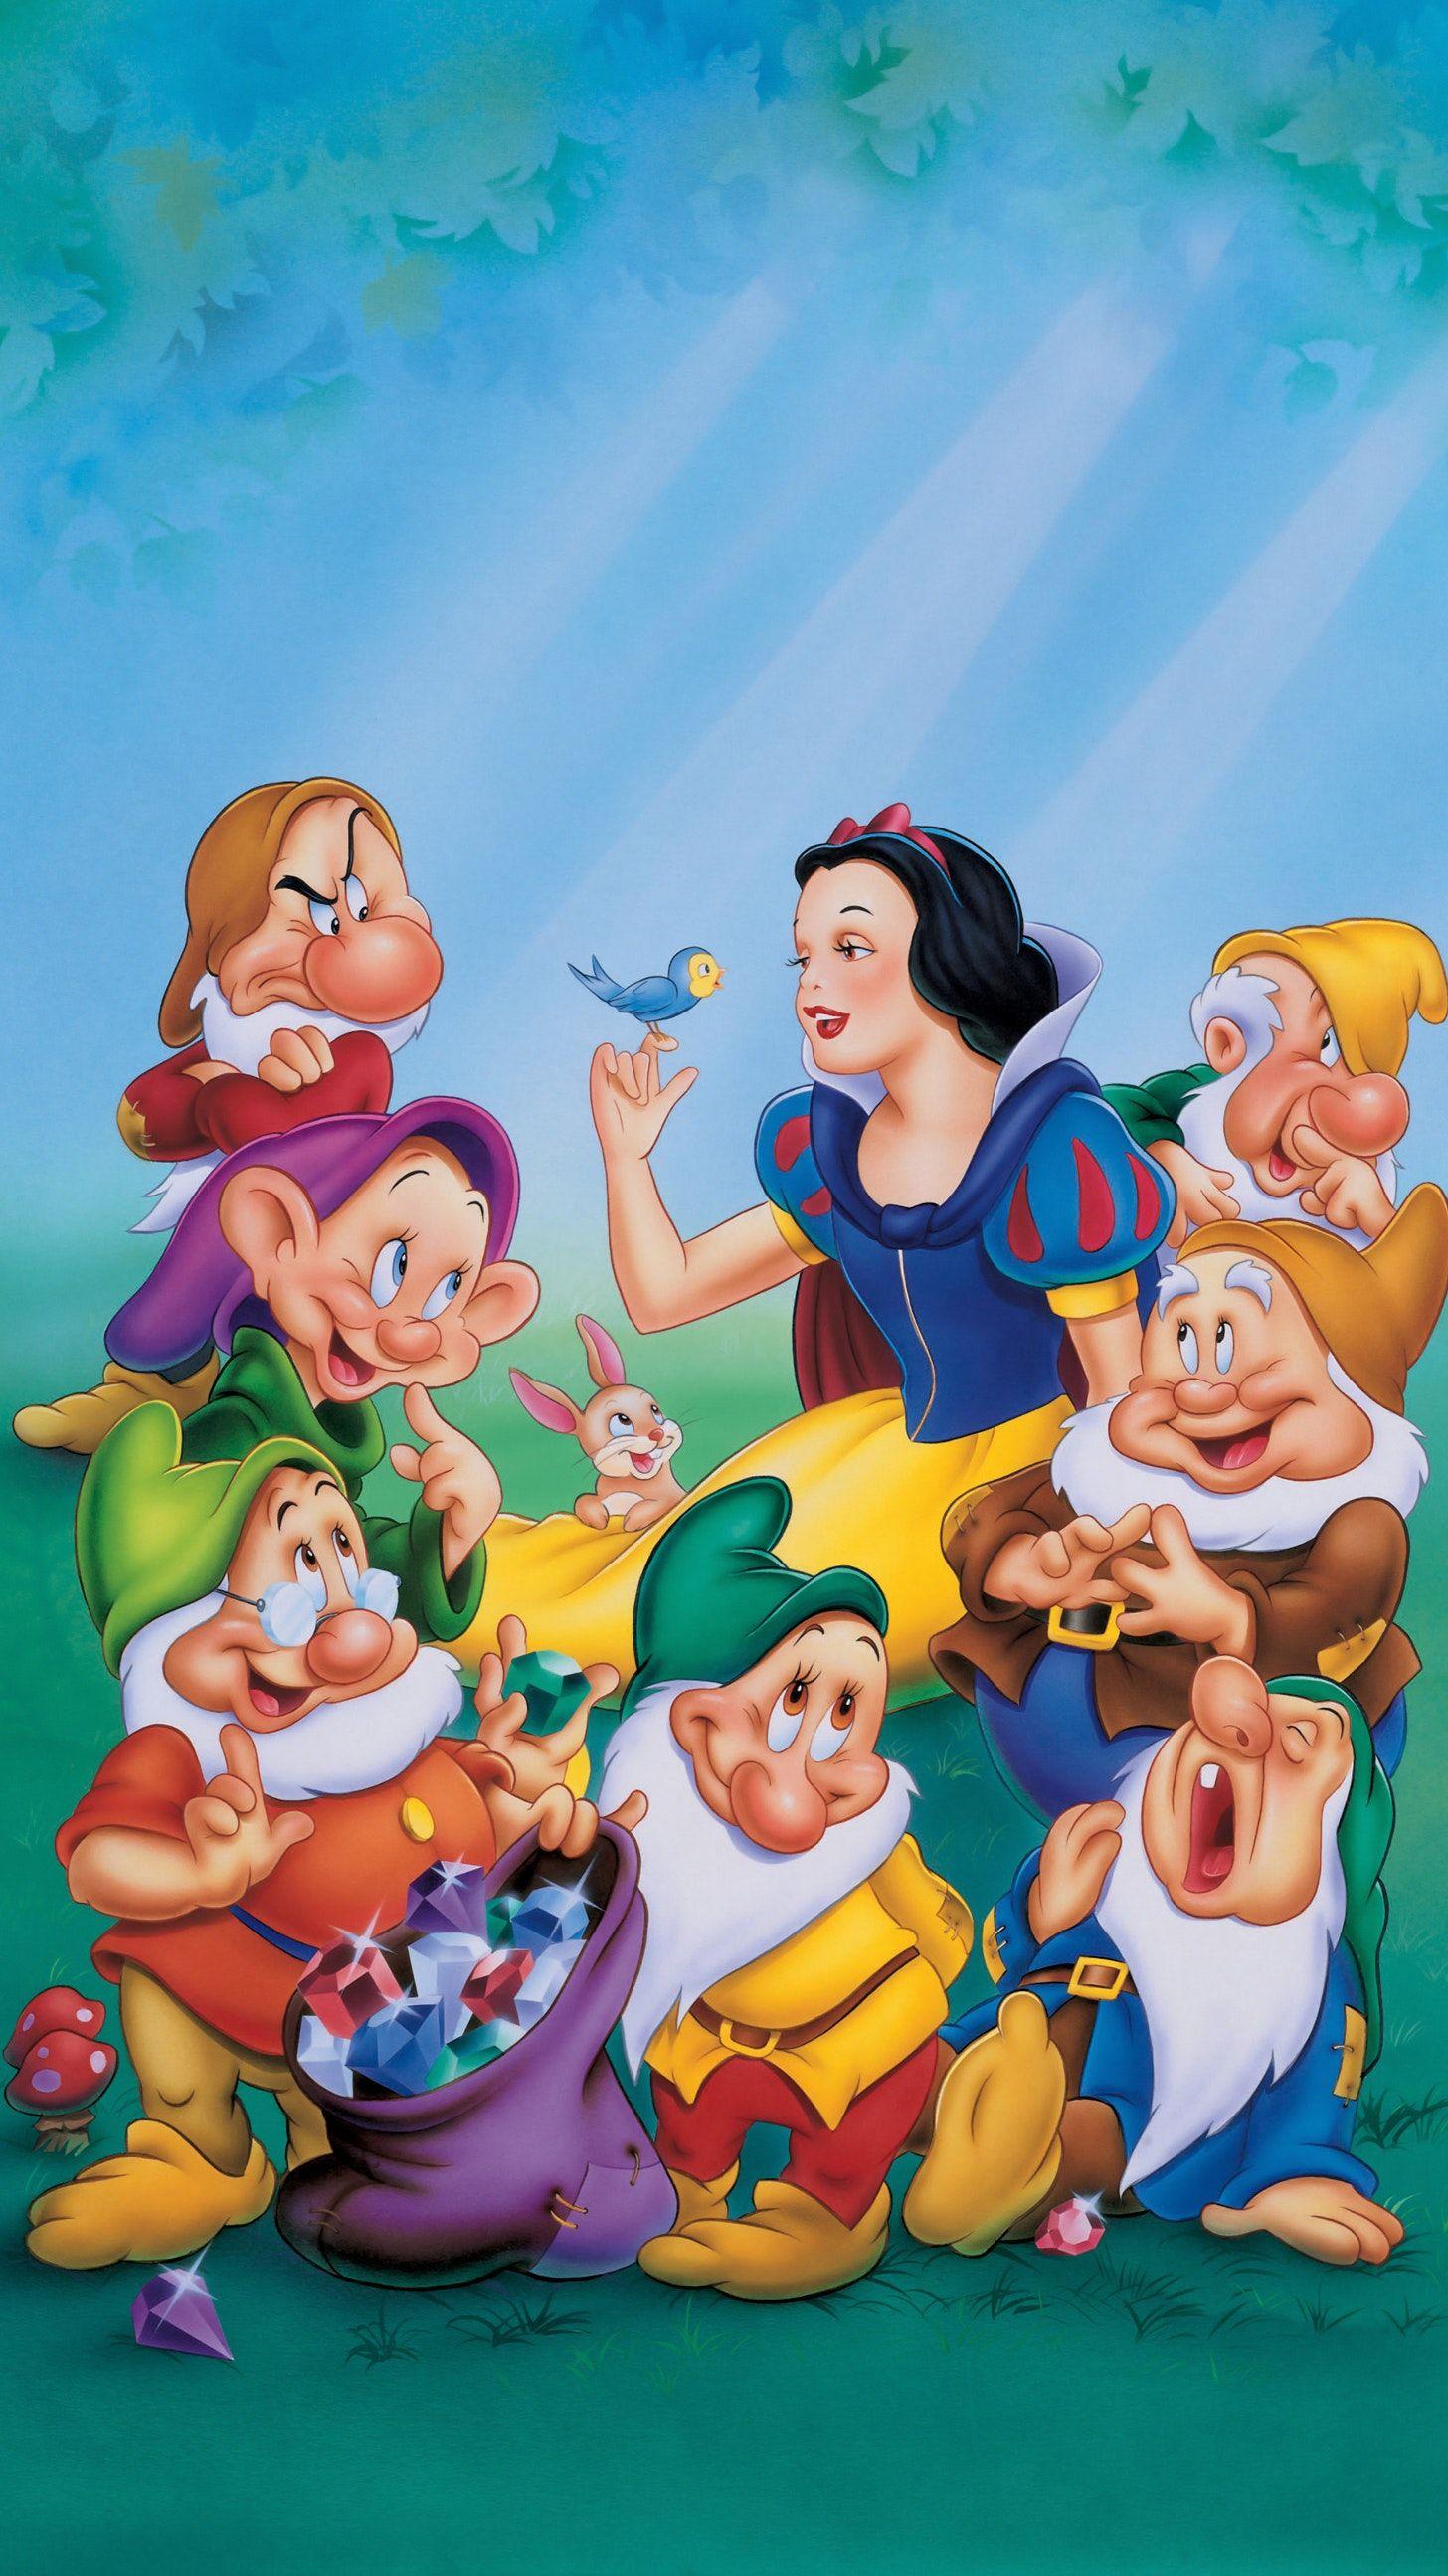 Disney's 'Snow White' Dwarf Changes Are a Lose-Lose Scenario